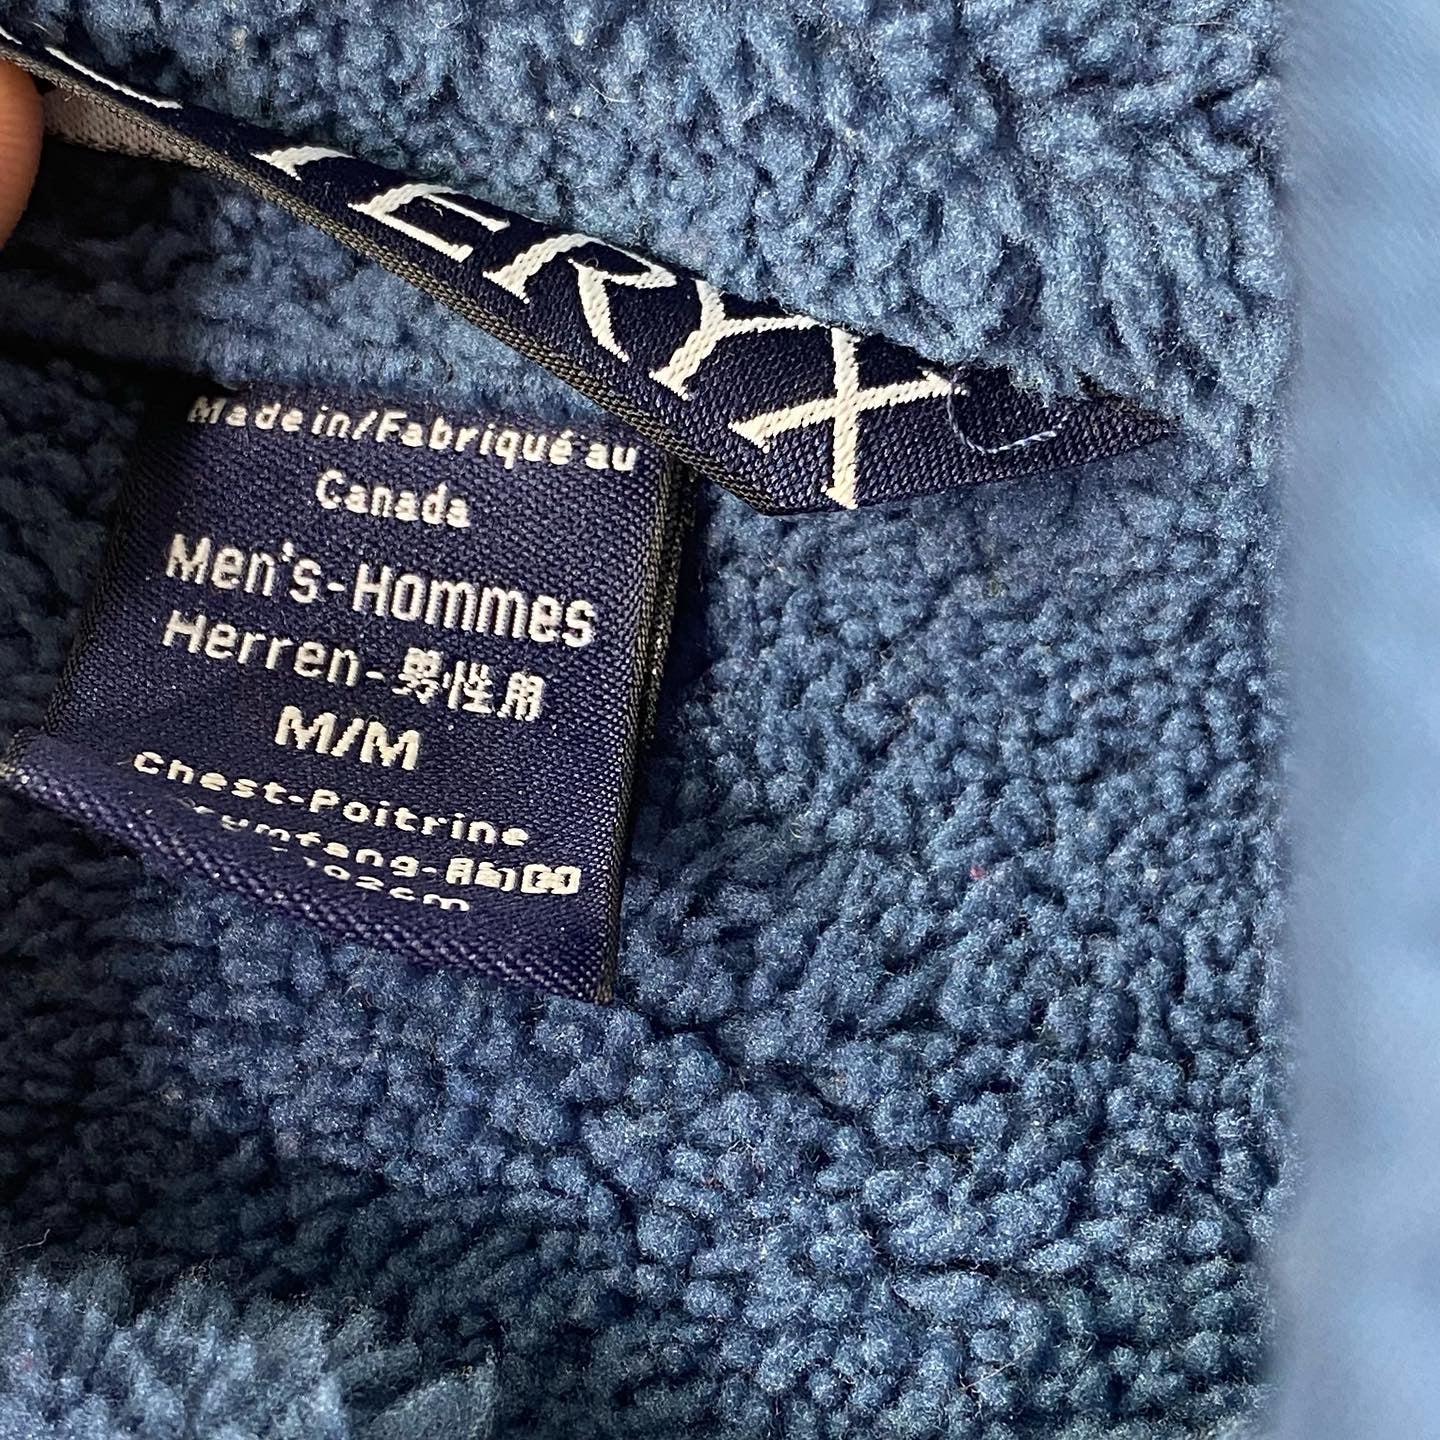 Arcteryx fleece. Made in canada. medium